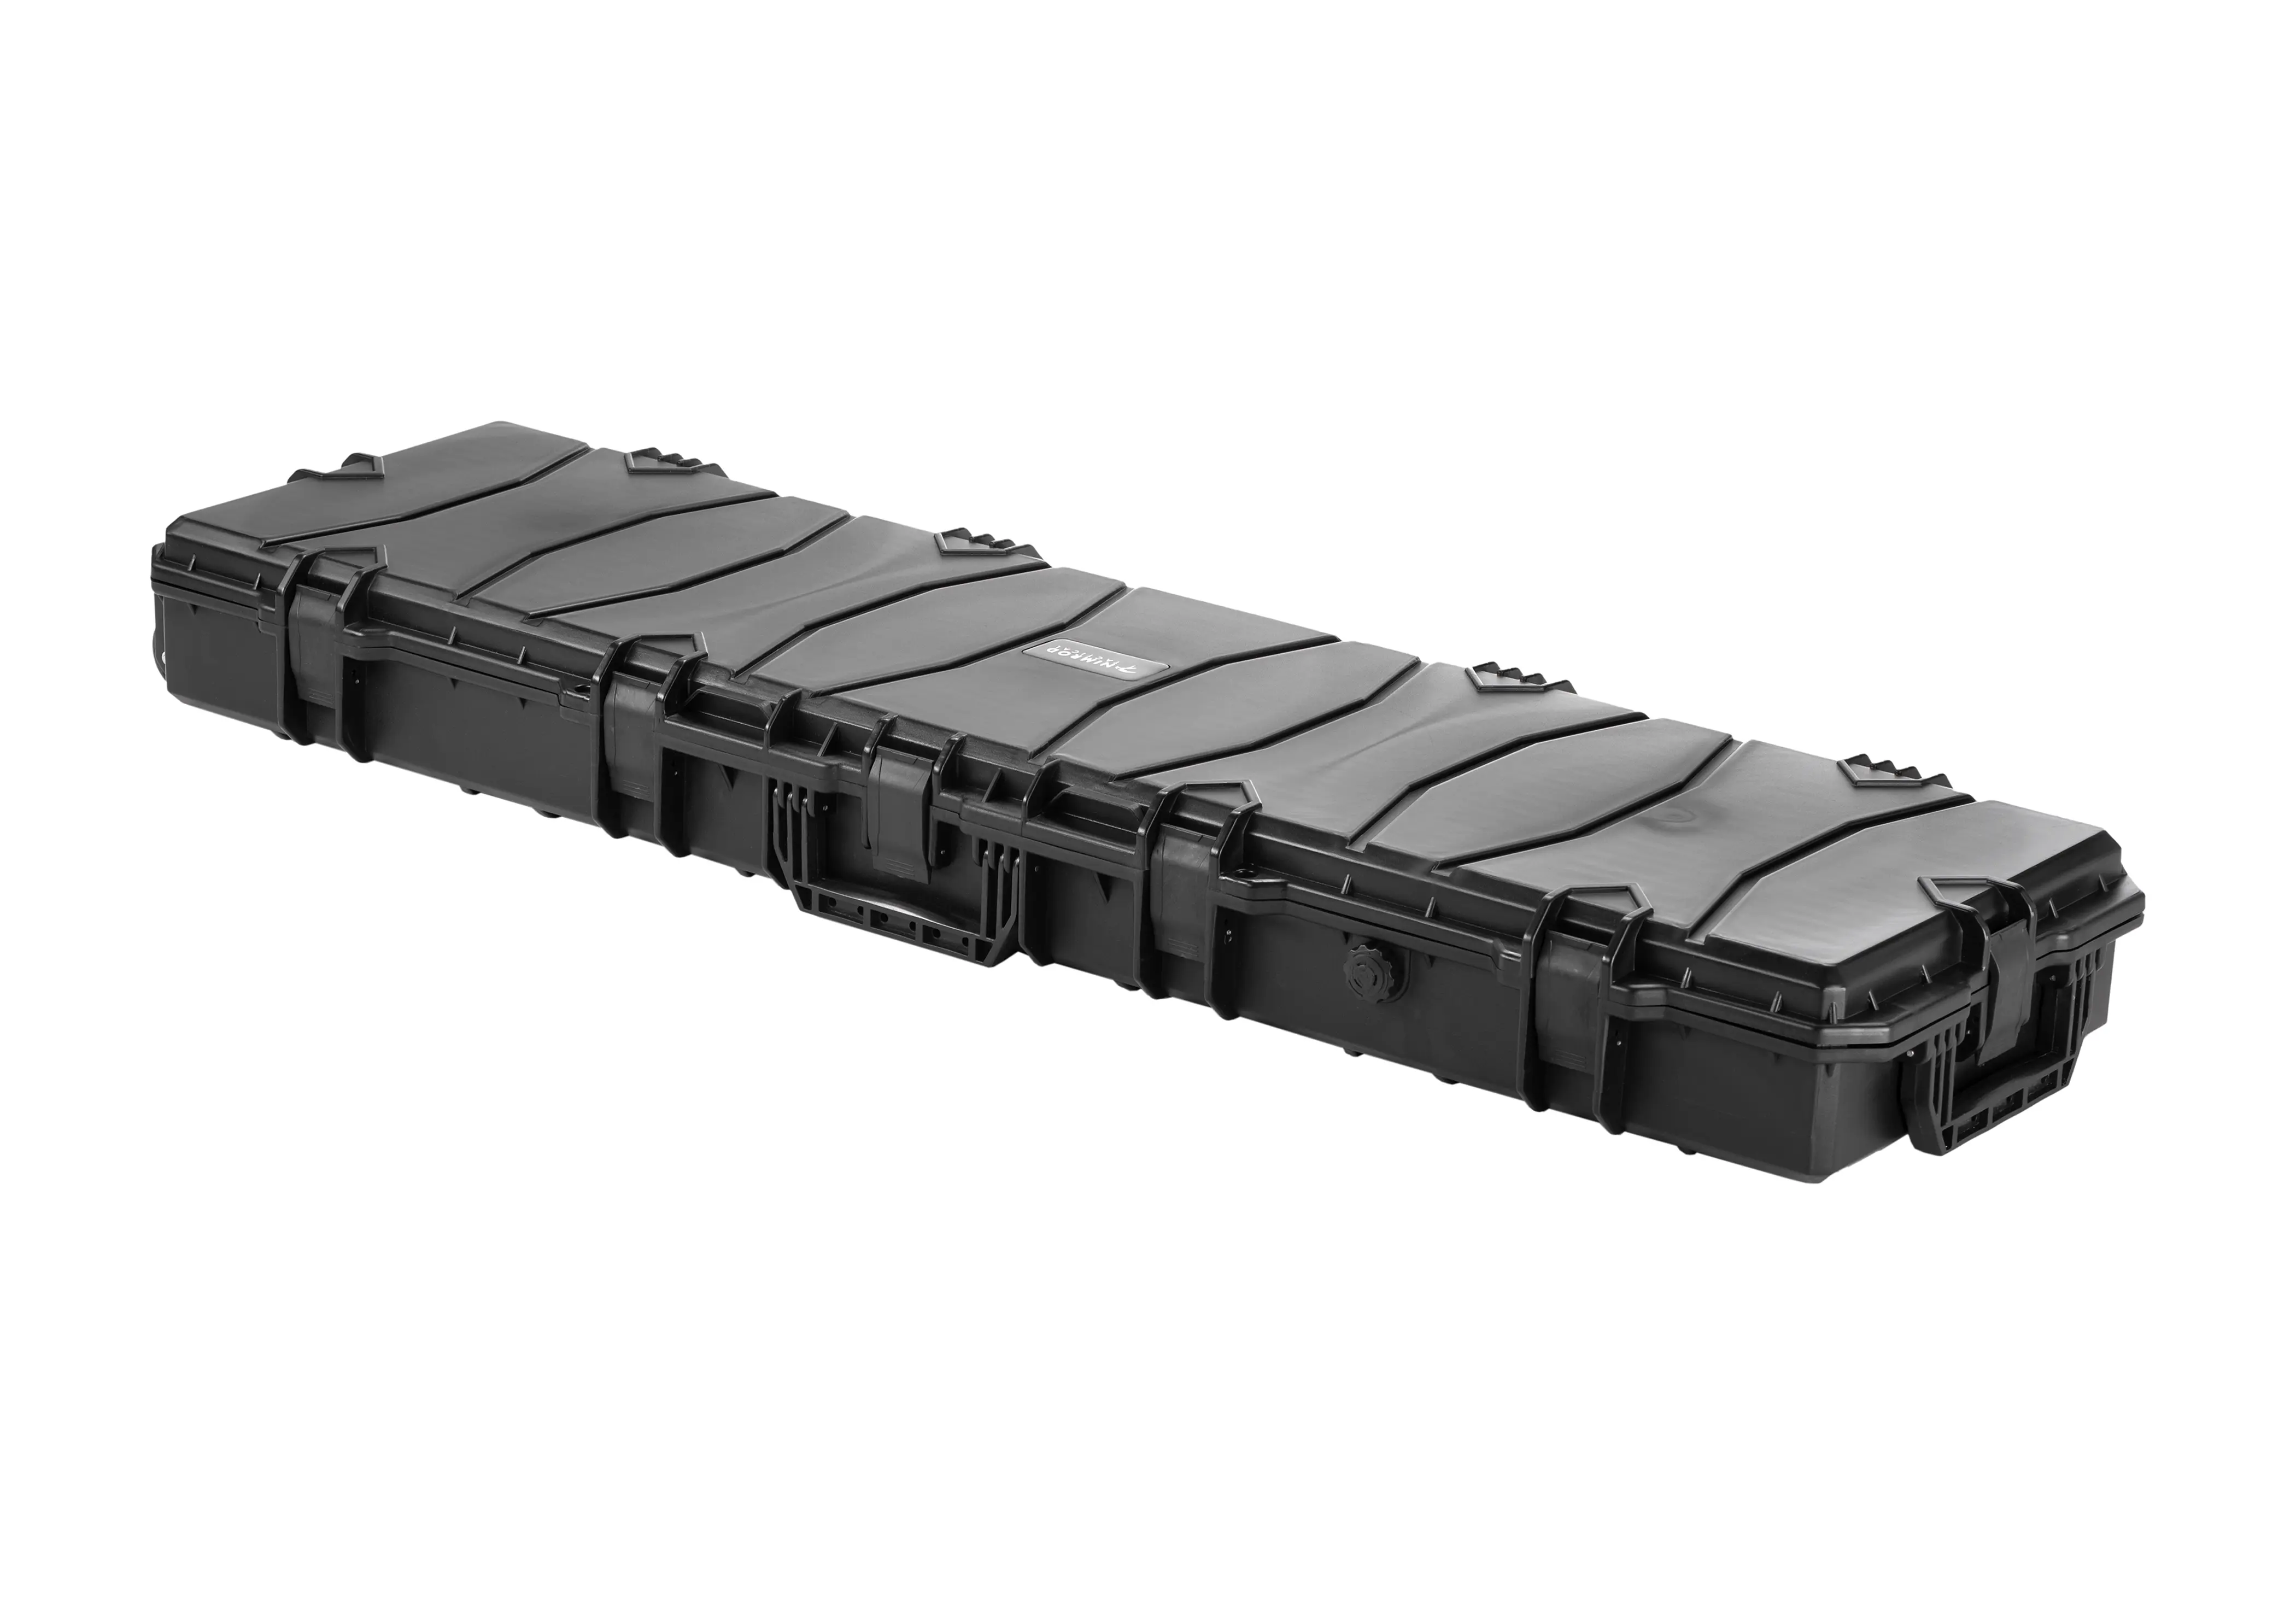 Nimrod Tactical Rifle Hard Case aselaukku, PNP Foam - 136cm